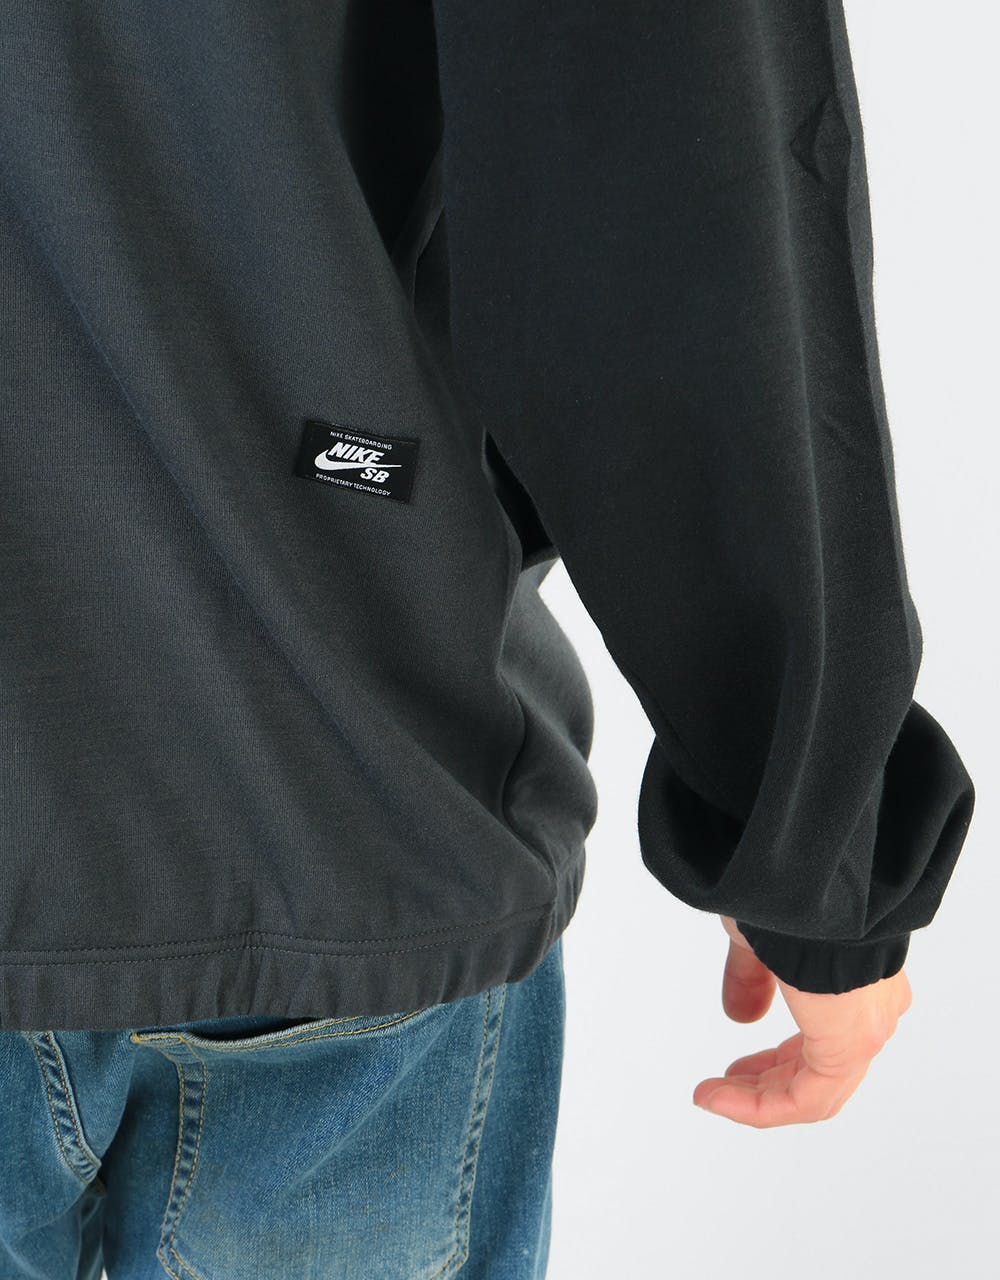 Nike SB Dr-Fit Track Jacket - Black/Anthracite/Black/White